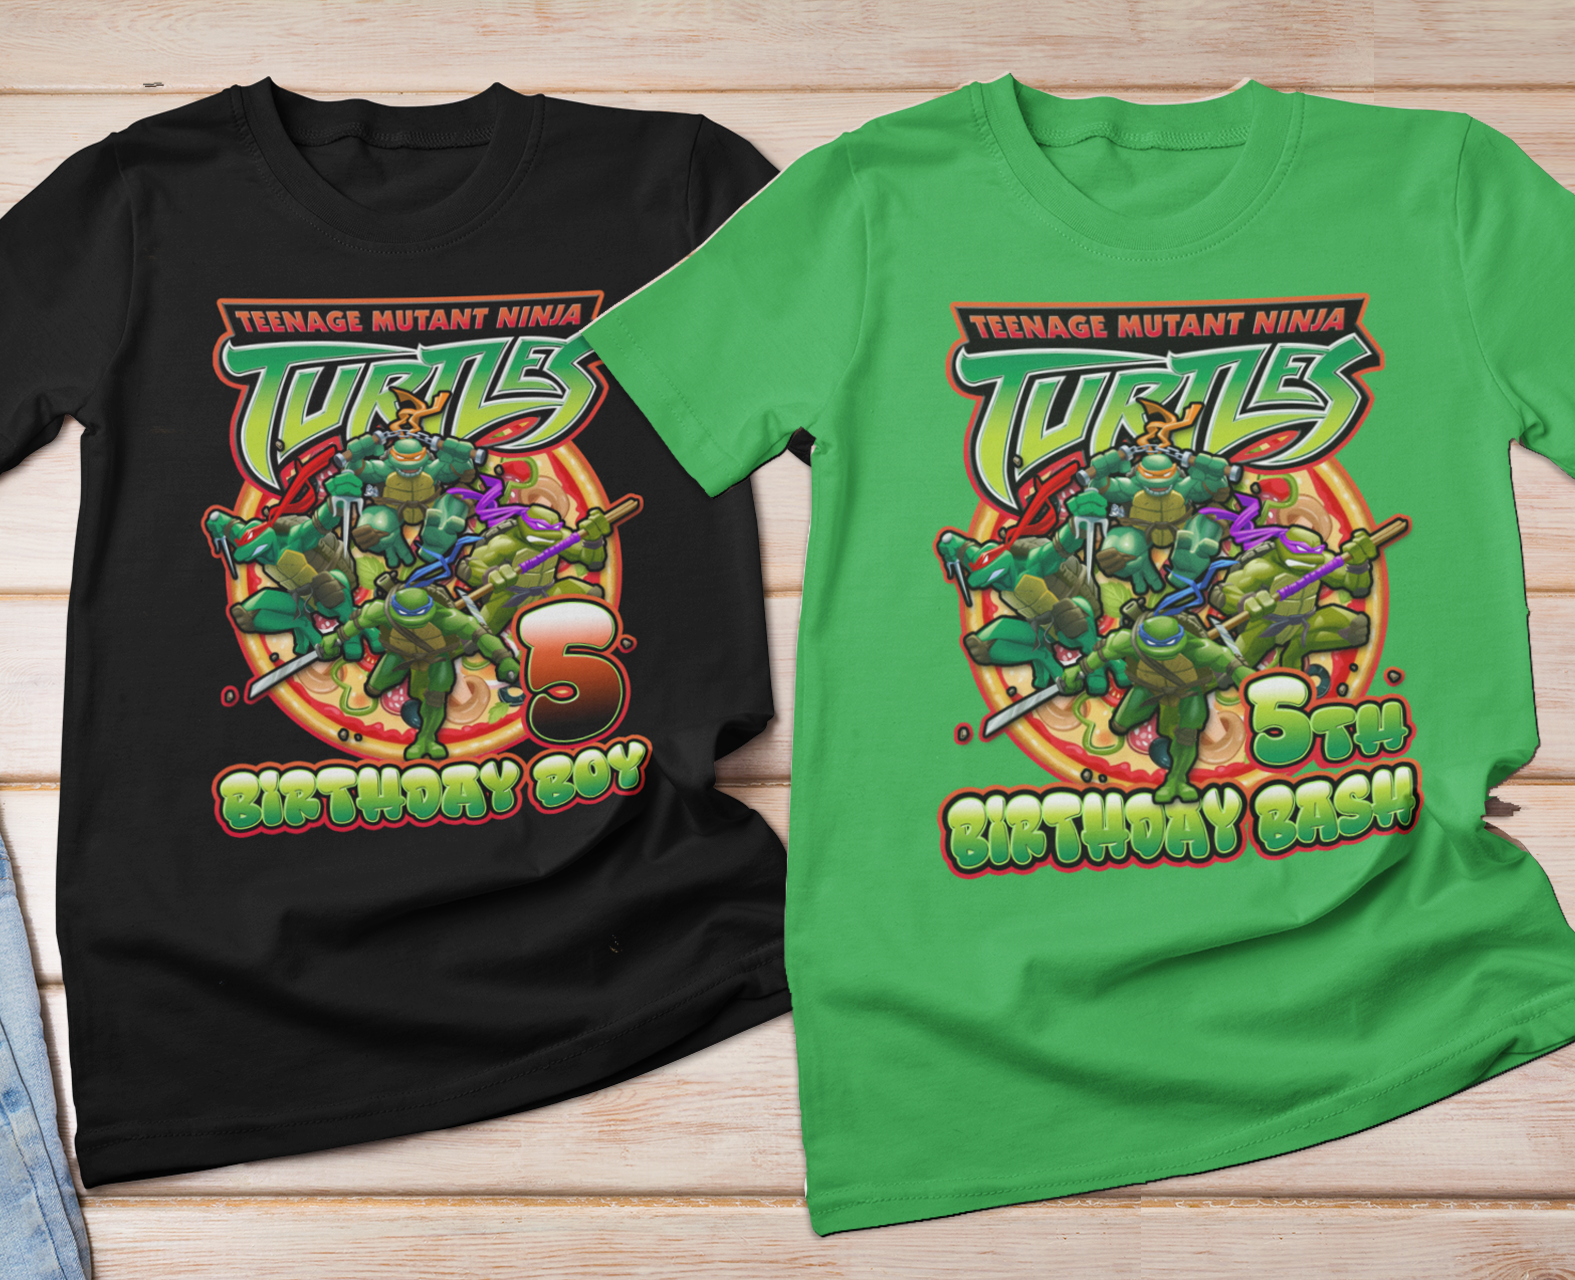 Mutant Teenage Turtle Ninjas Family Matching Birthday Shirts The Birthday Boy / Large Unisex Adult